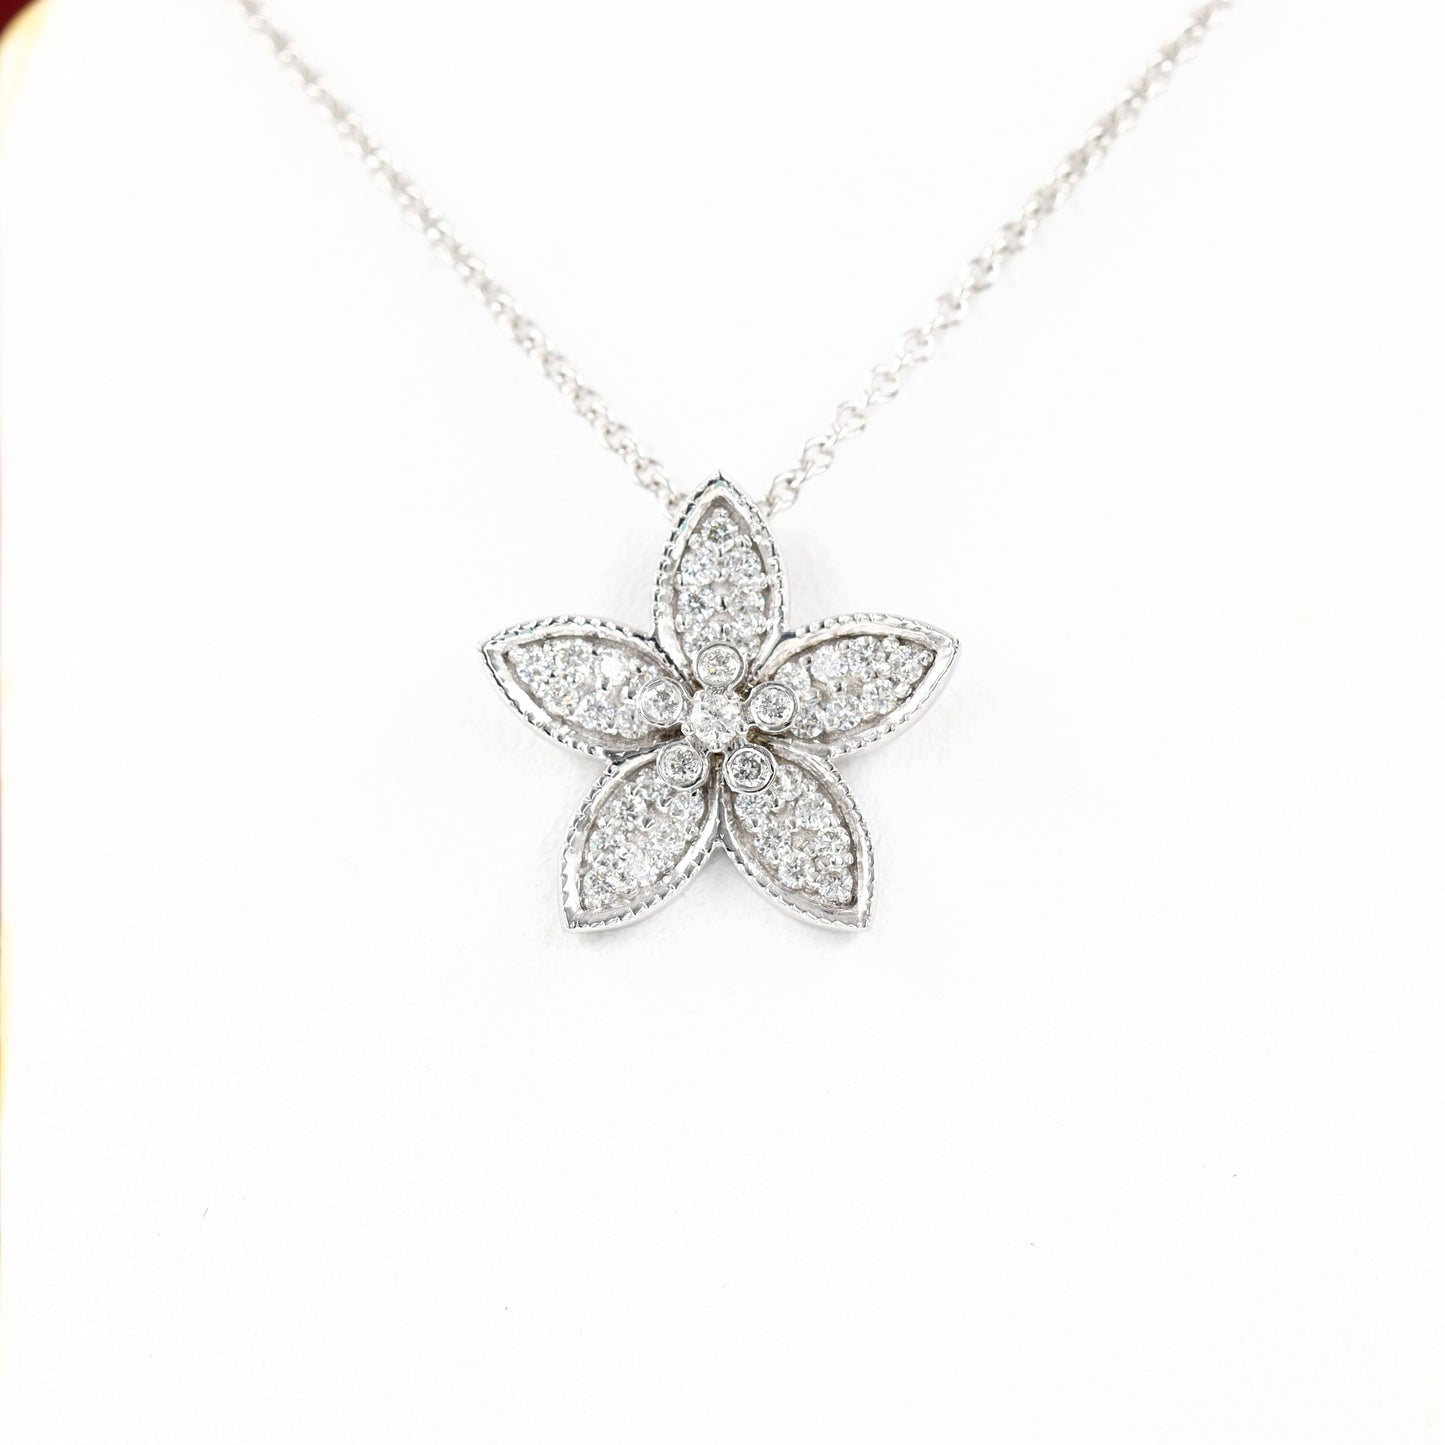 Round Diamond Pendant / Flower Petal Diamond Charm / 14K Solid Gold Natural Diamond Pendant / Anniversary Gift / Gift for Her